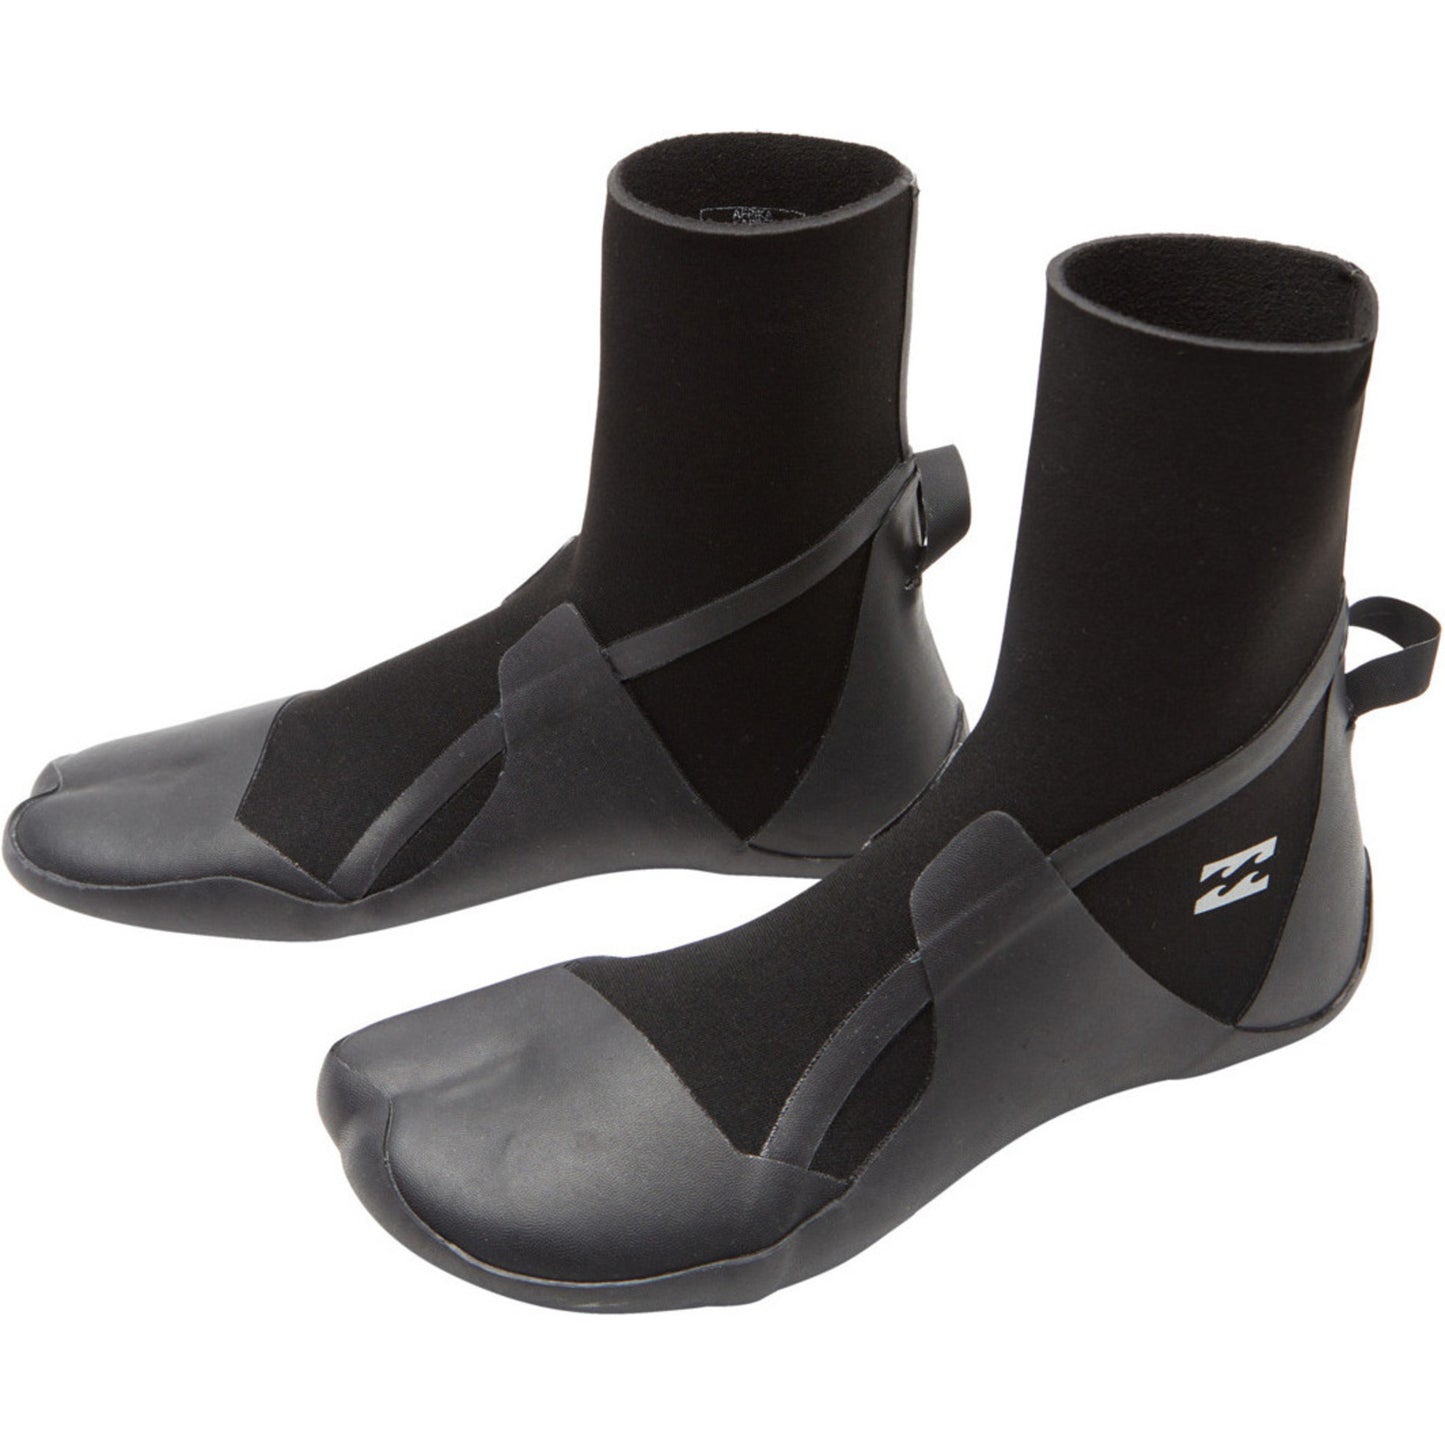 Billabong Absolute 3mm Adult Split Toe Wetsuit Boots